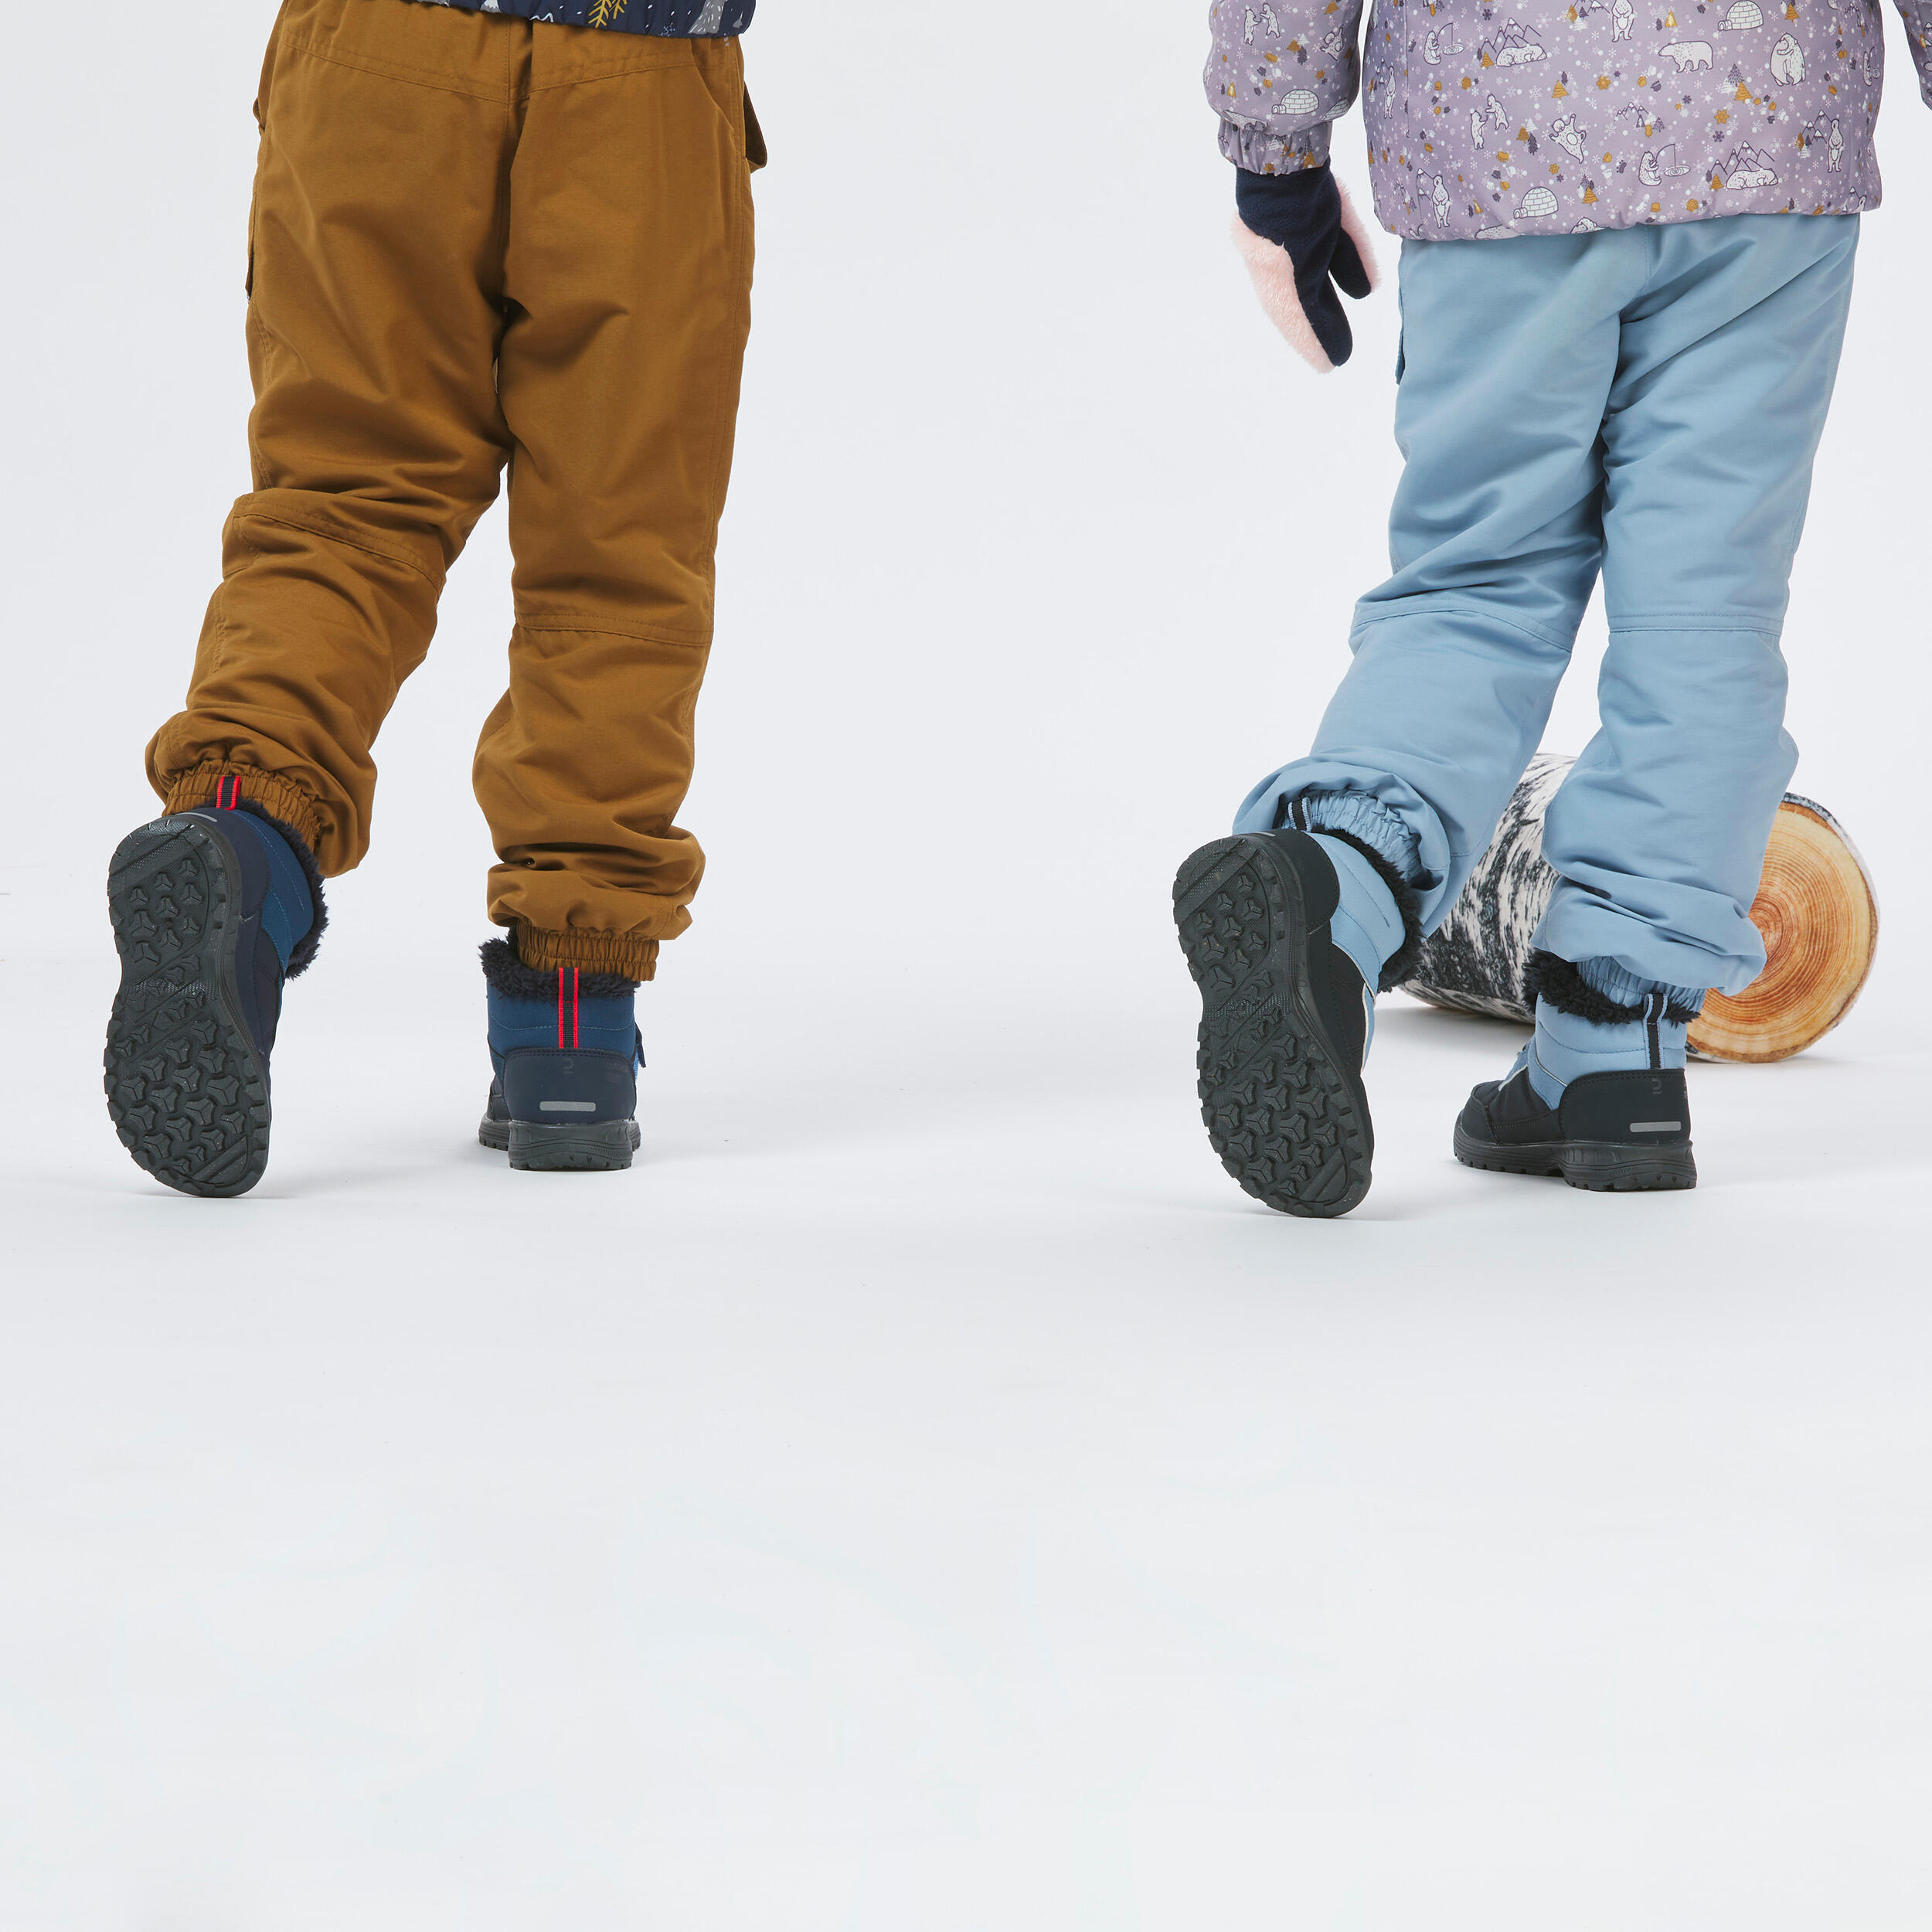 KIDS’ WARM WATERPROOF HIKING BOOTS - SH100 hook and loop strap - Size 24–34 9/10